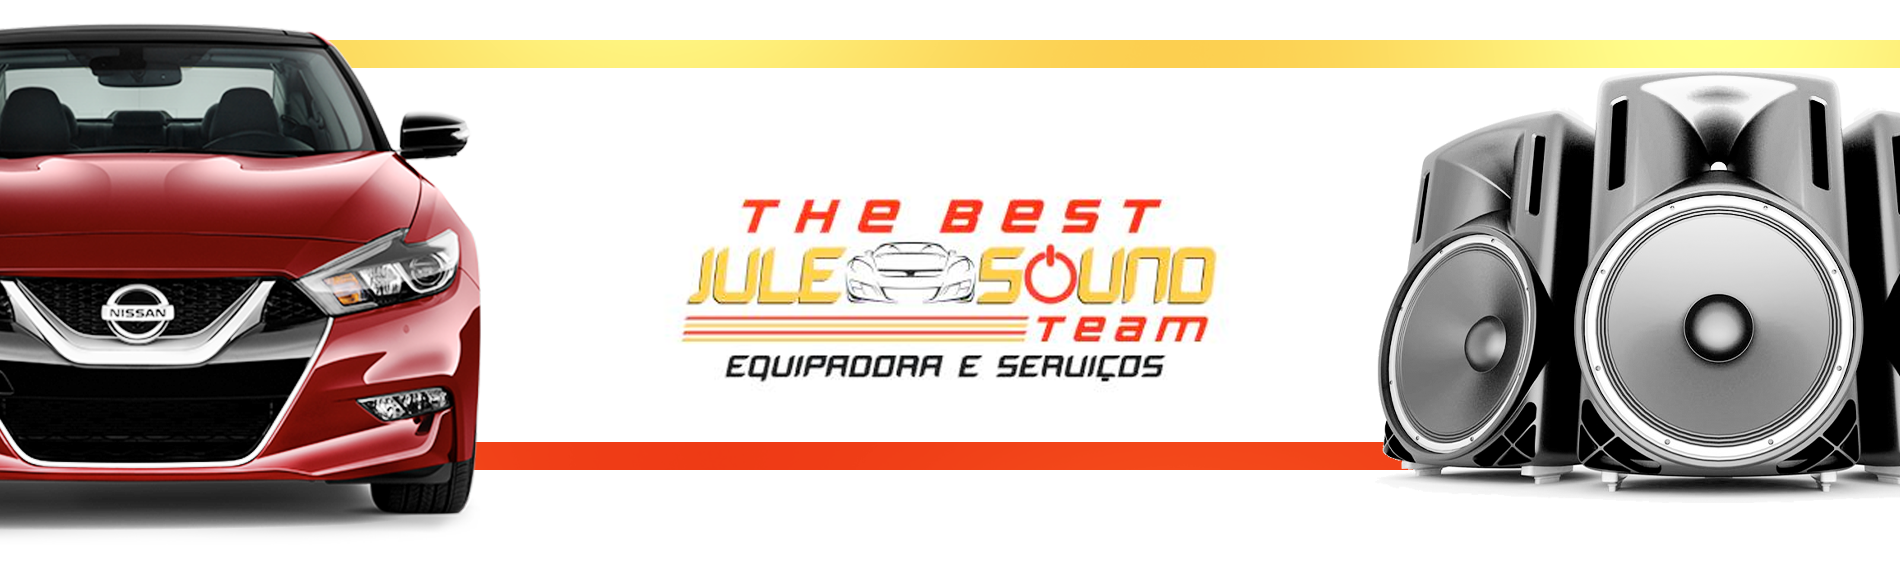 banner da empresa Jule Sound Team Equipadora e Serviços